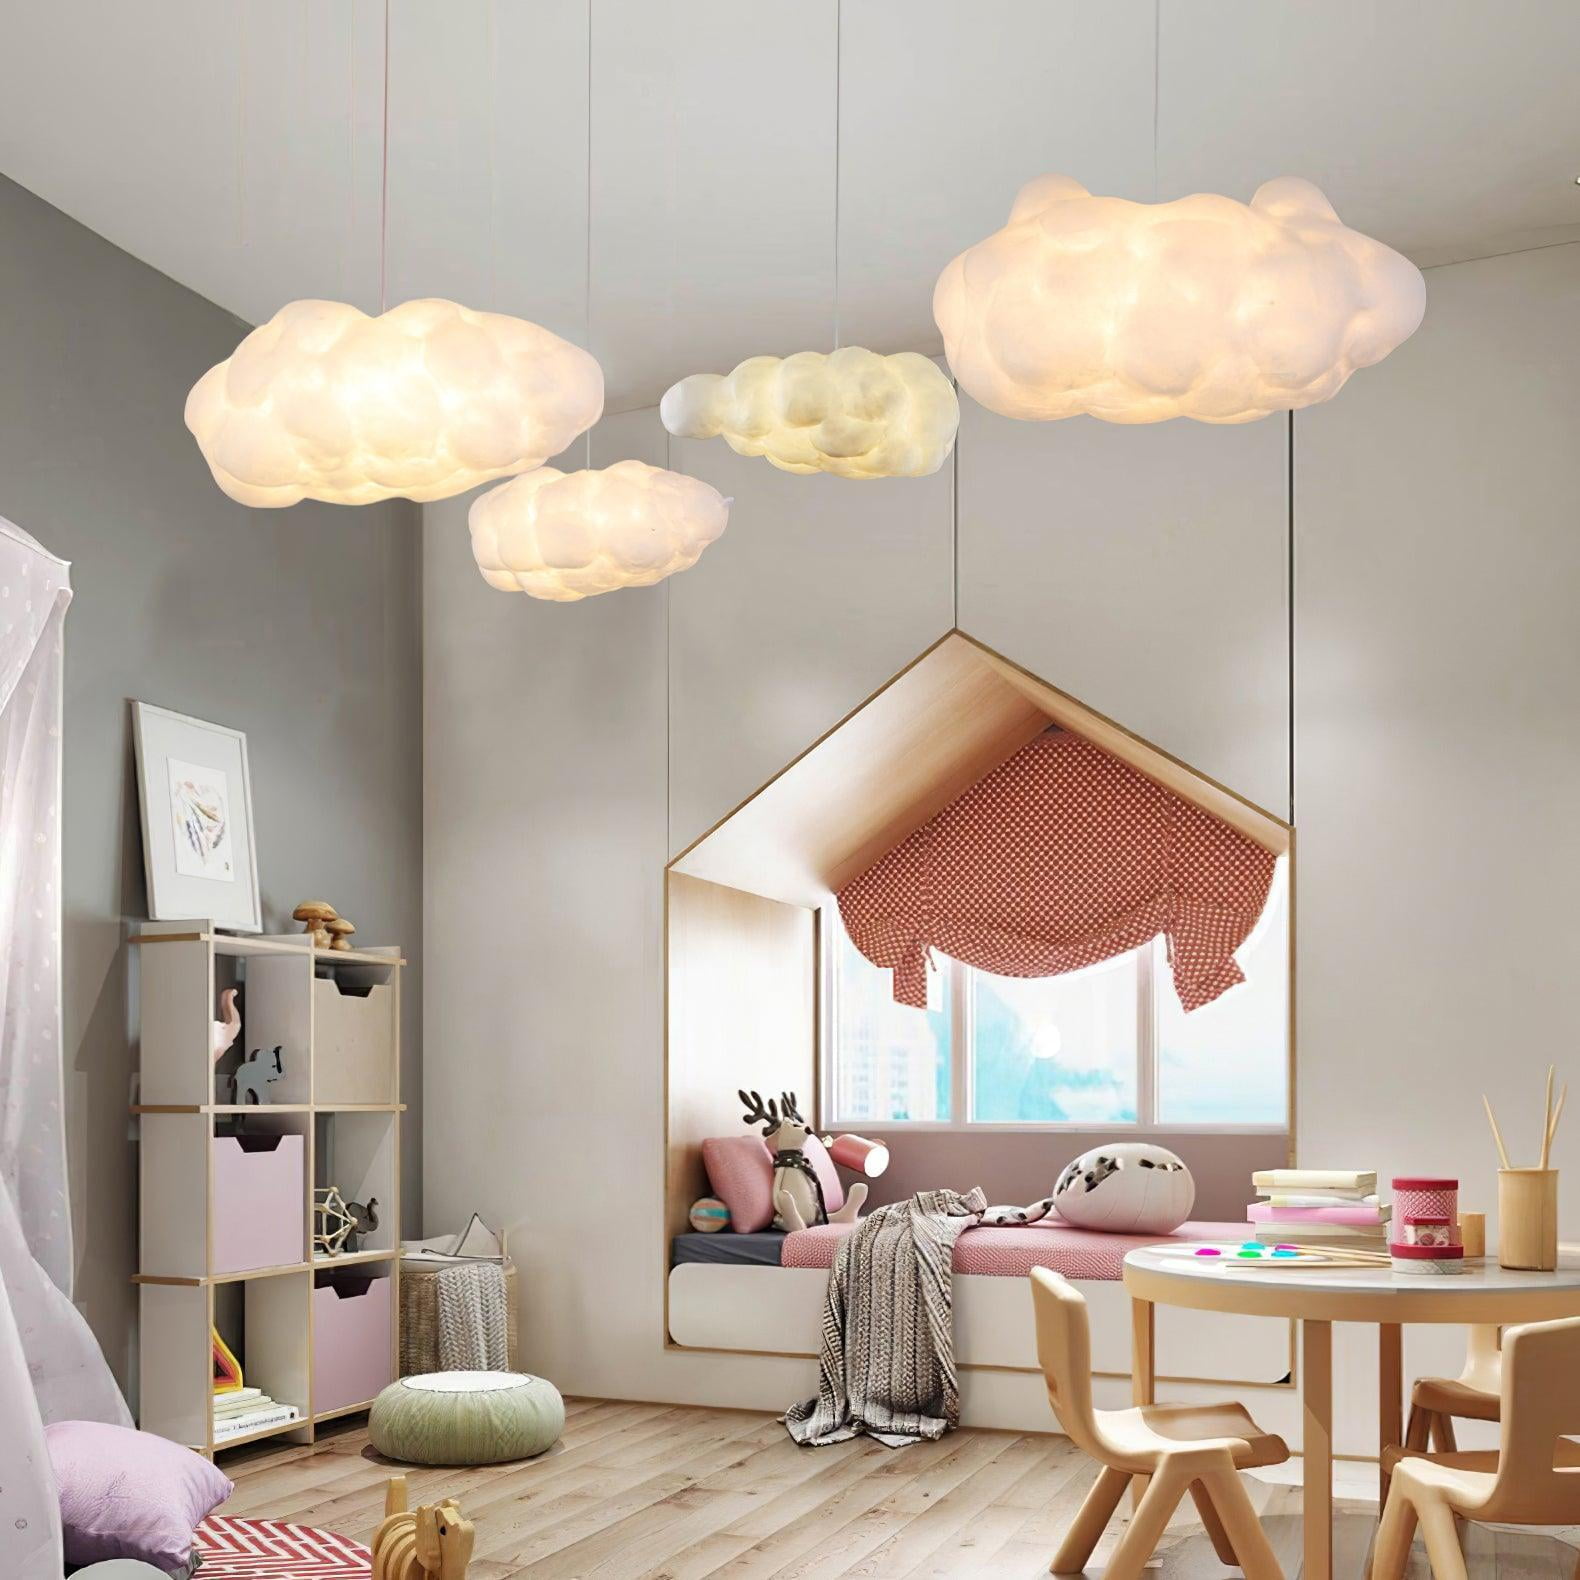 Kids Room Decor Hanging Lamp, Nursery Decor Pendant Light, Baby Room Decor  Lamp Shade 